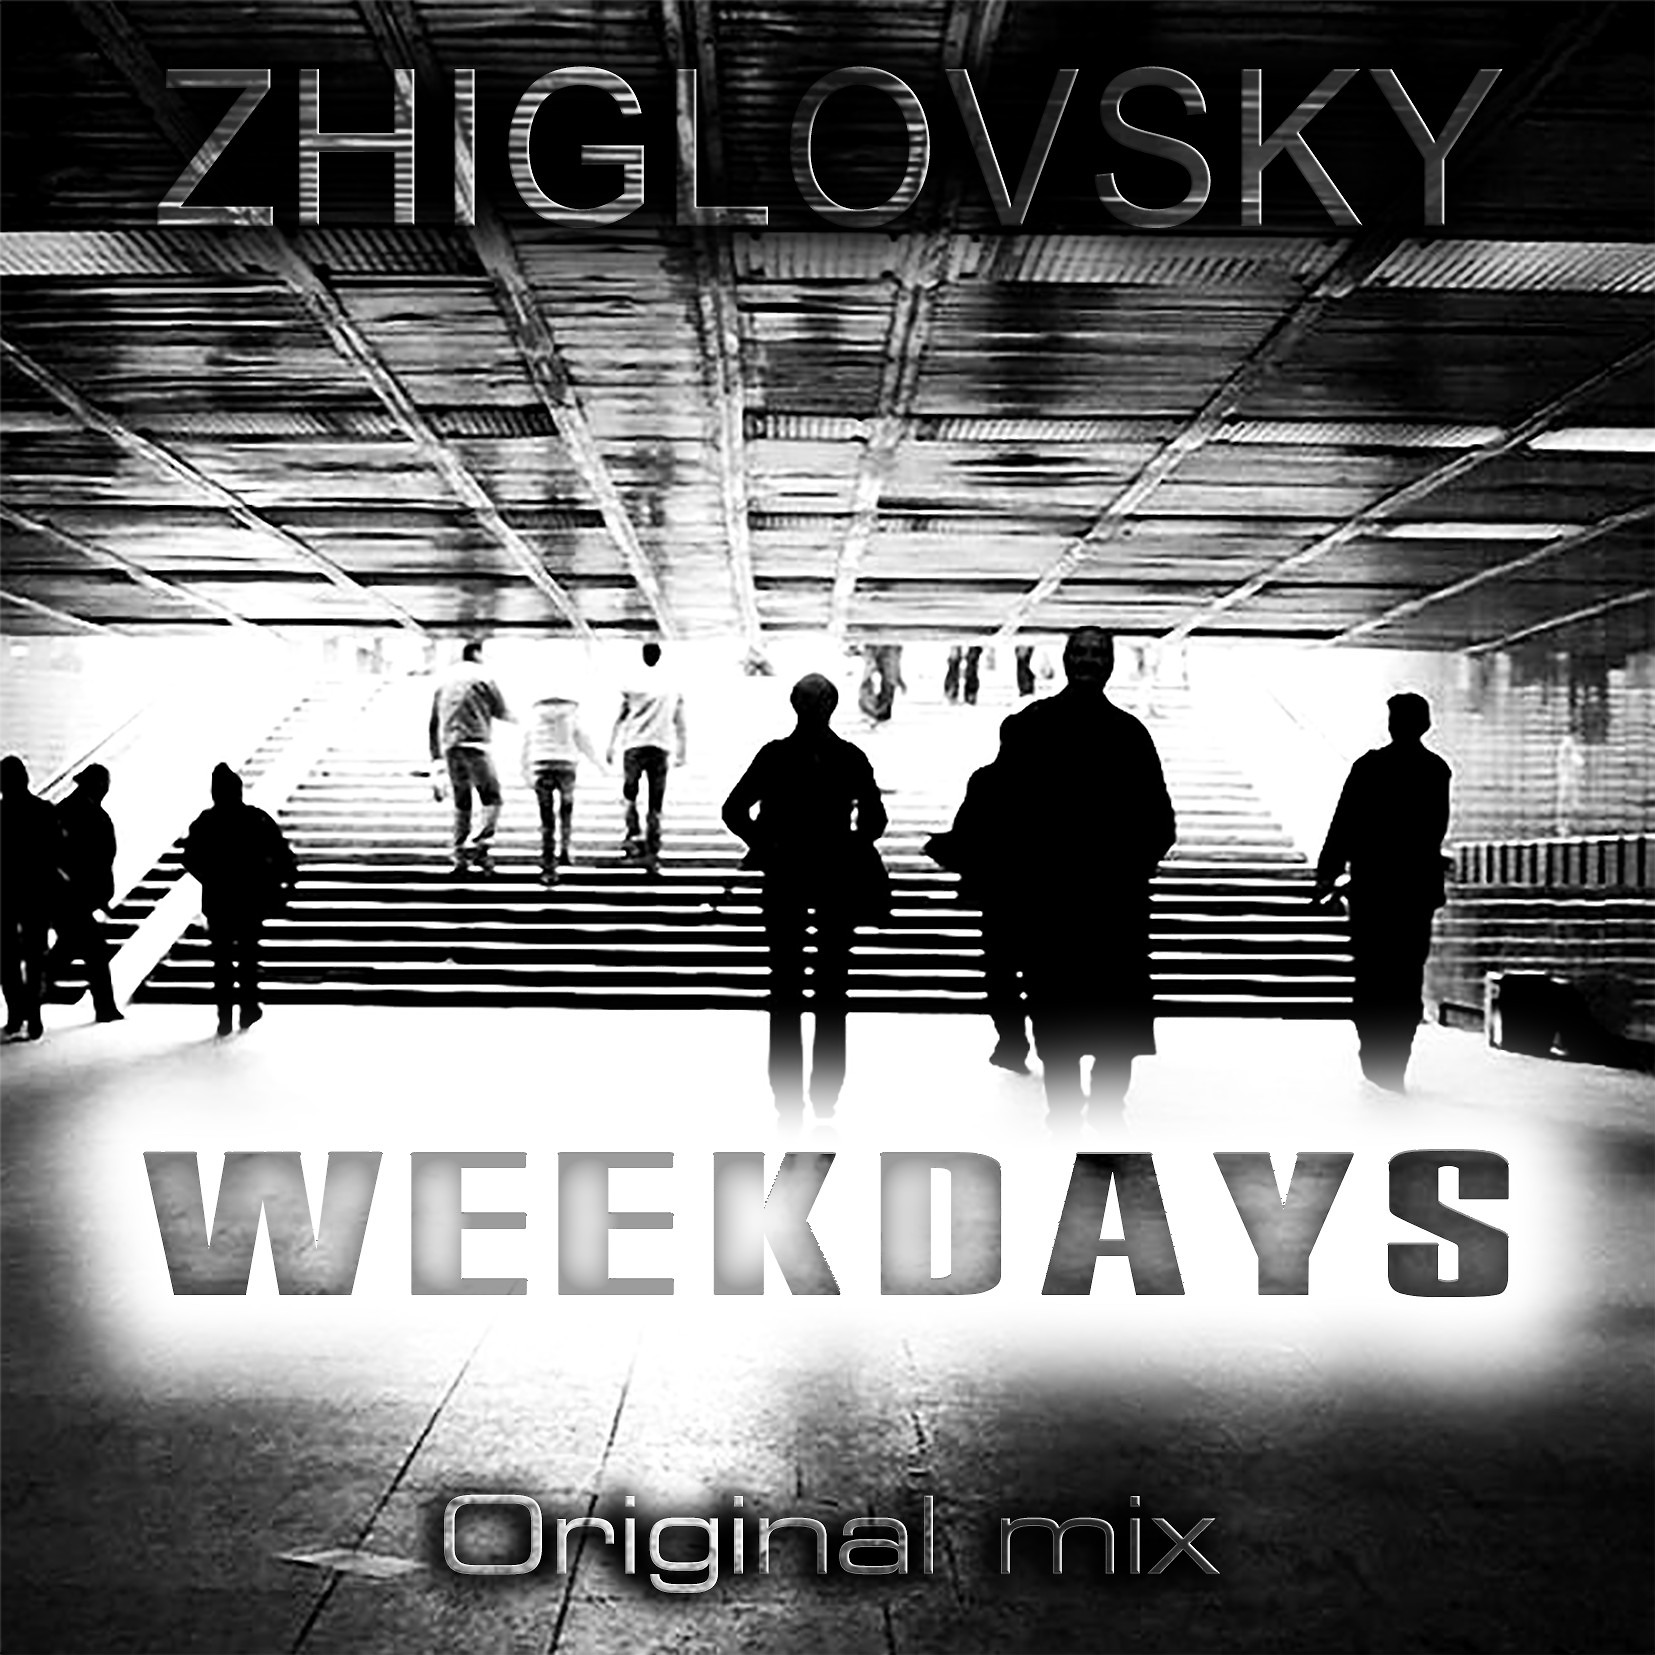 DJ.ru: WEEKDAYS (Original mix) - ZHIGLOVSKY, Tech-House 